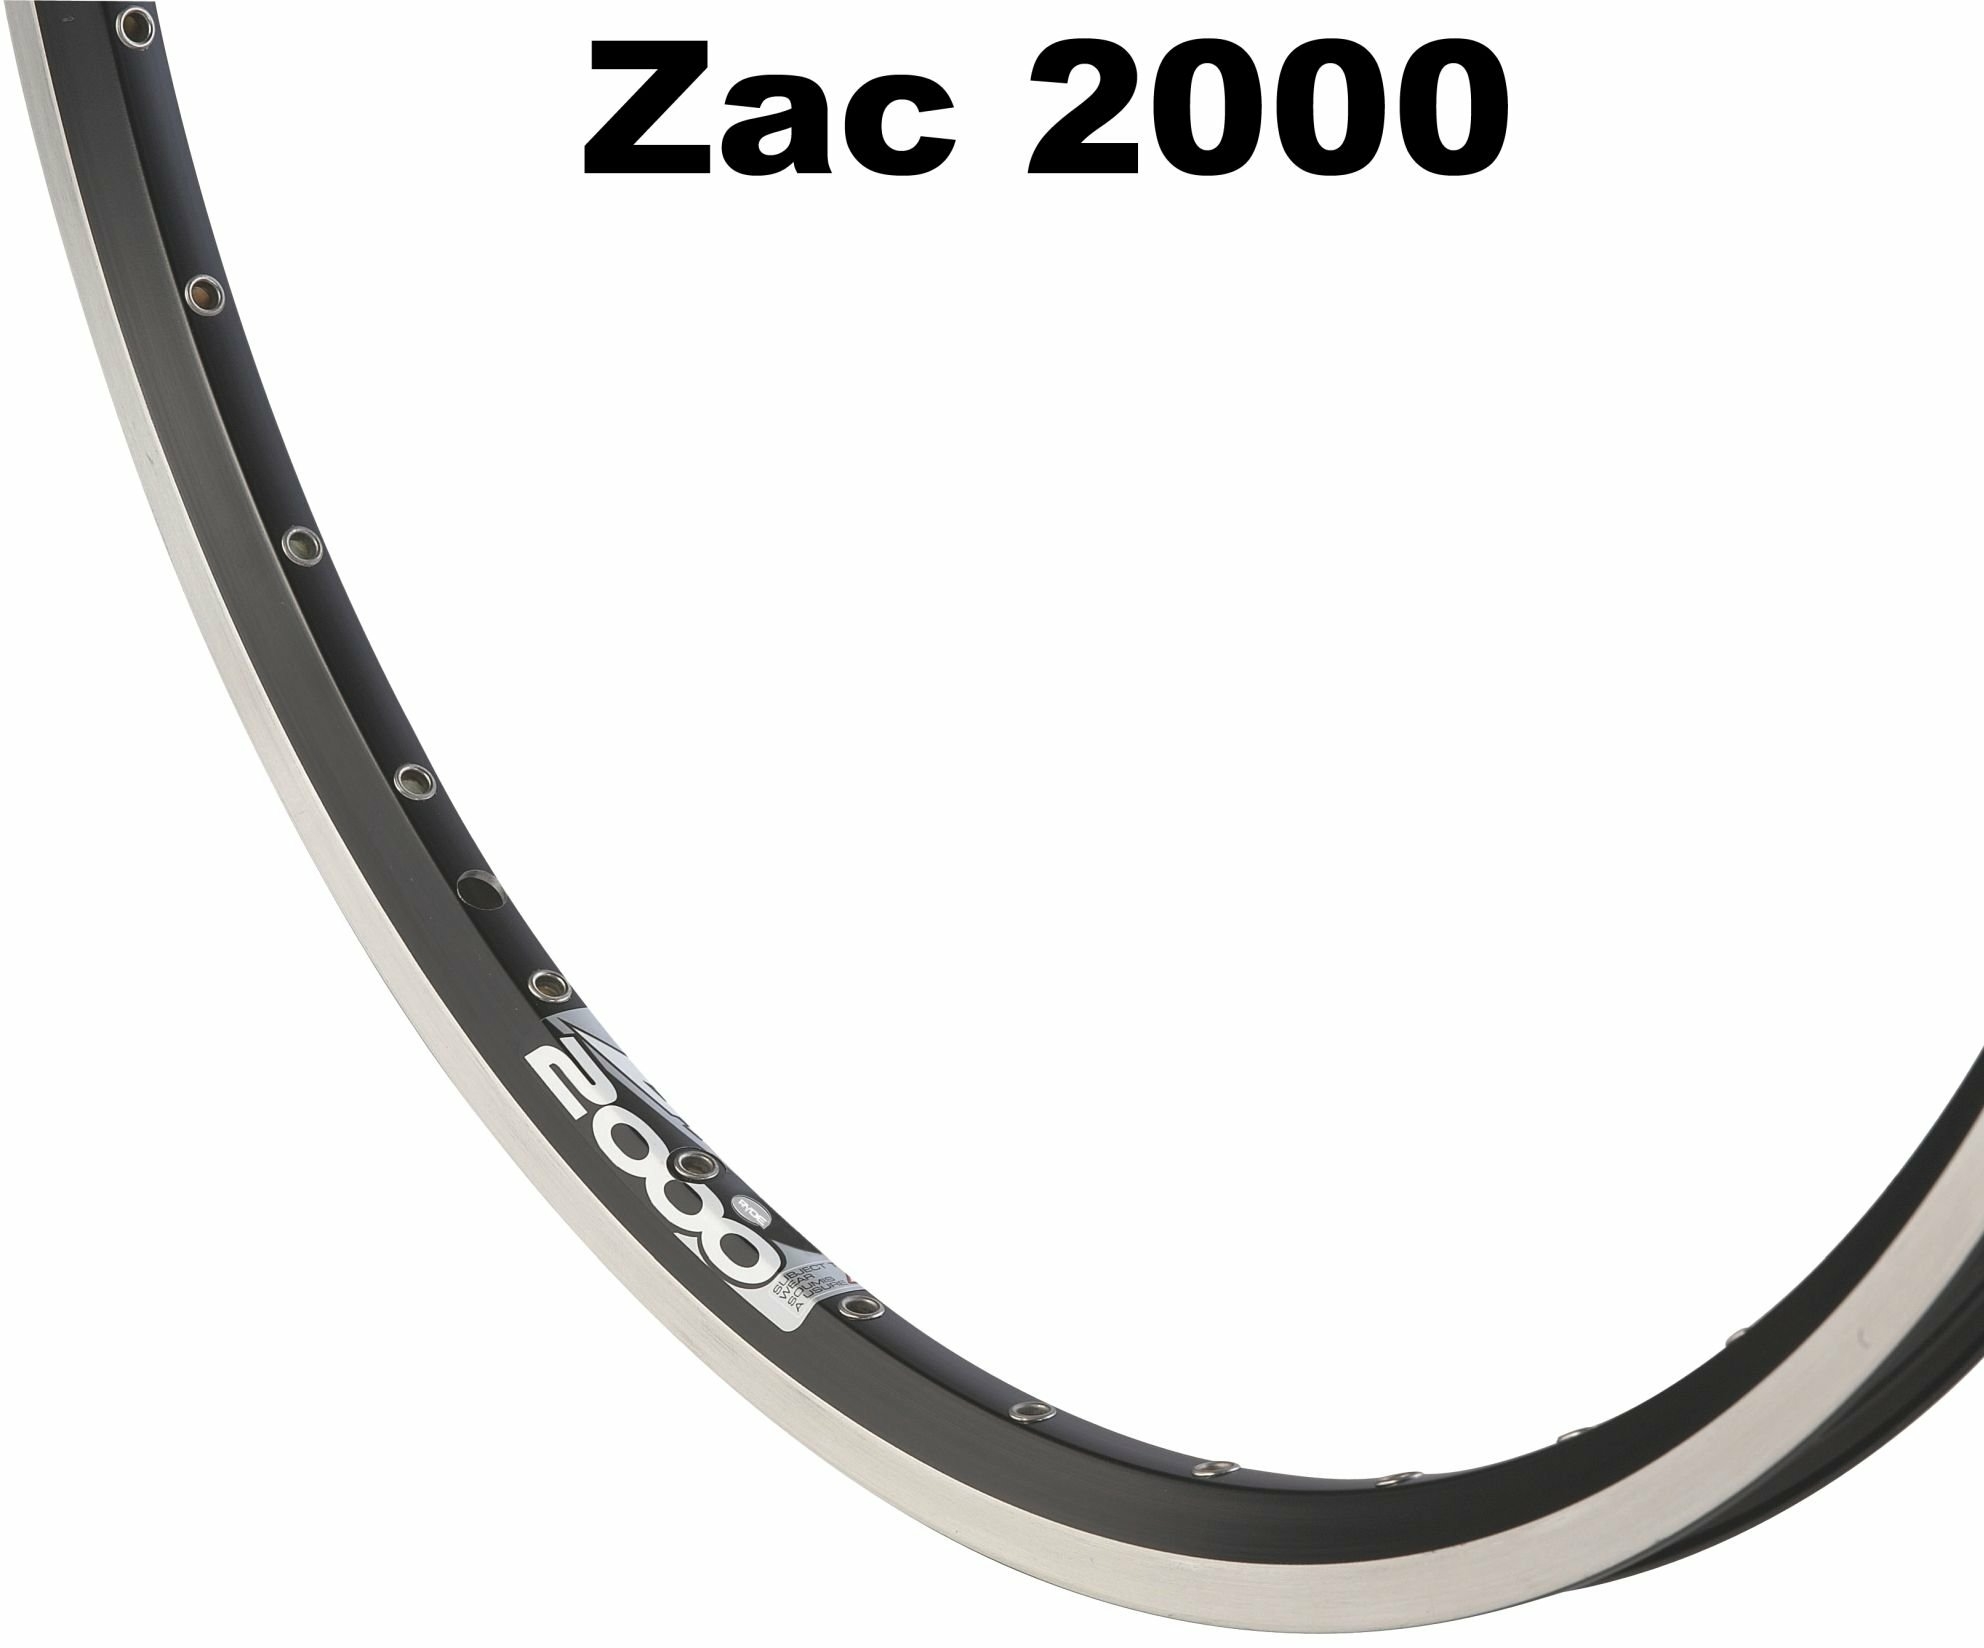 RYDE Hinterrad ZAC 2000 (M610), 26 Zoll